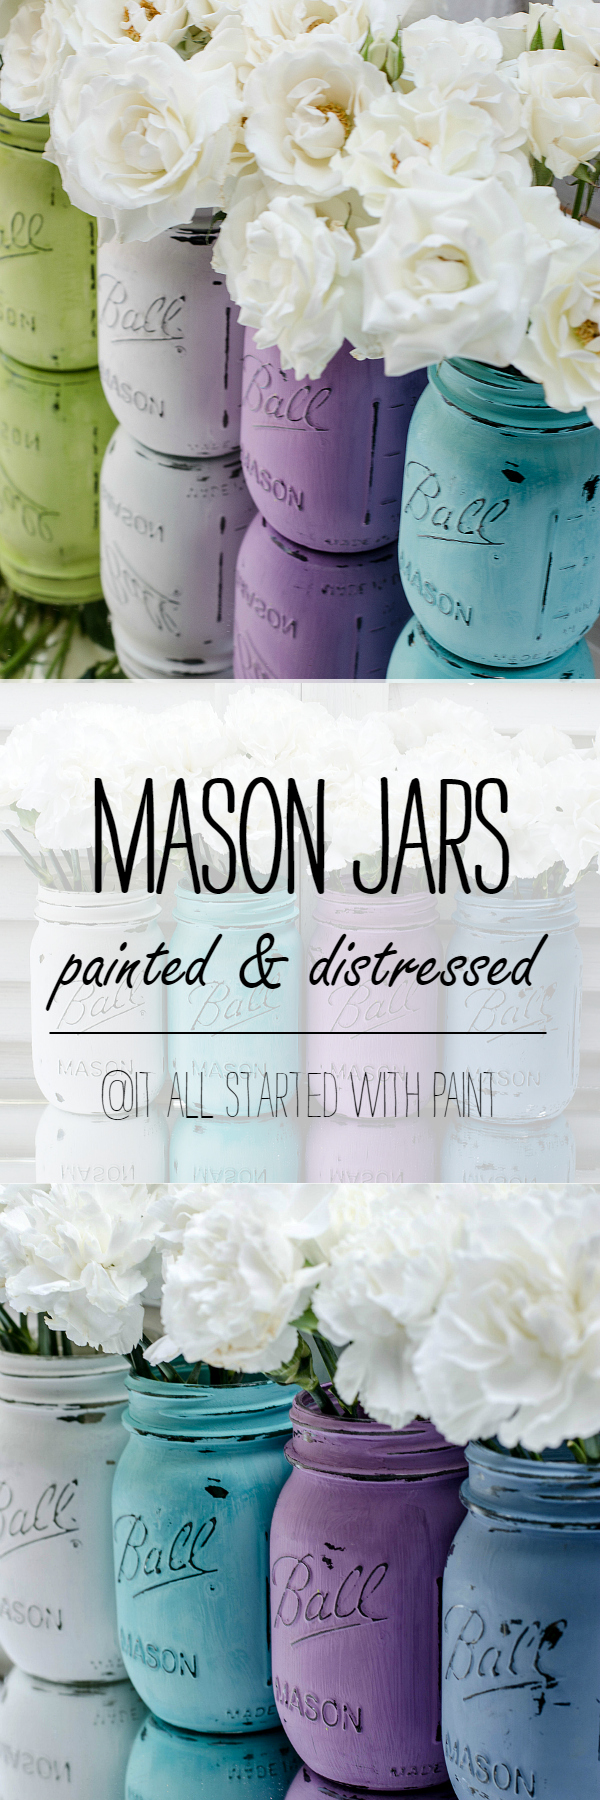 Mason Jars Painted & Distressed - Spring Colors, Decor